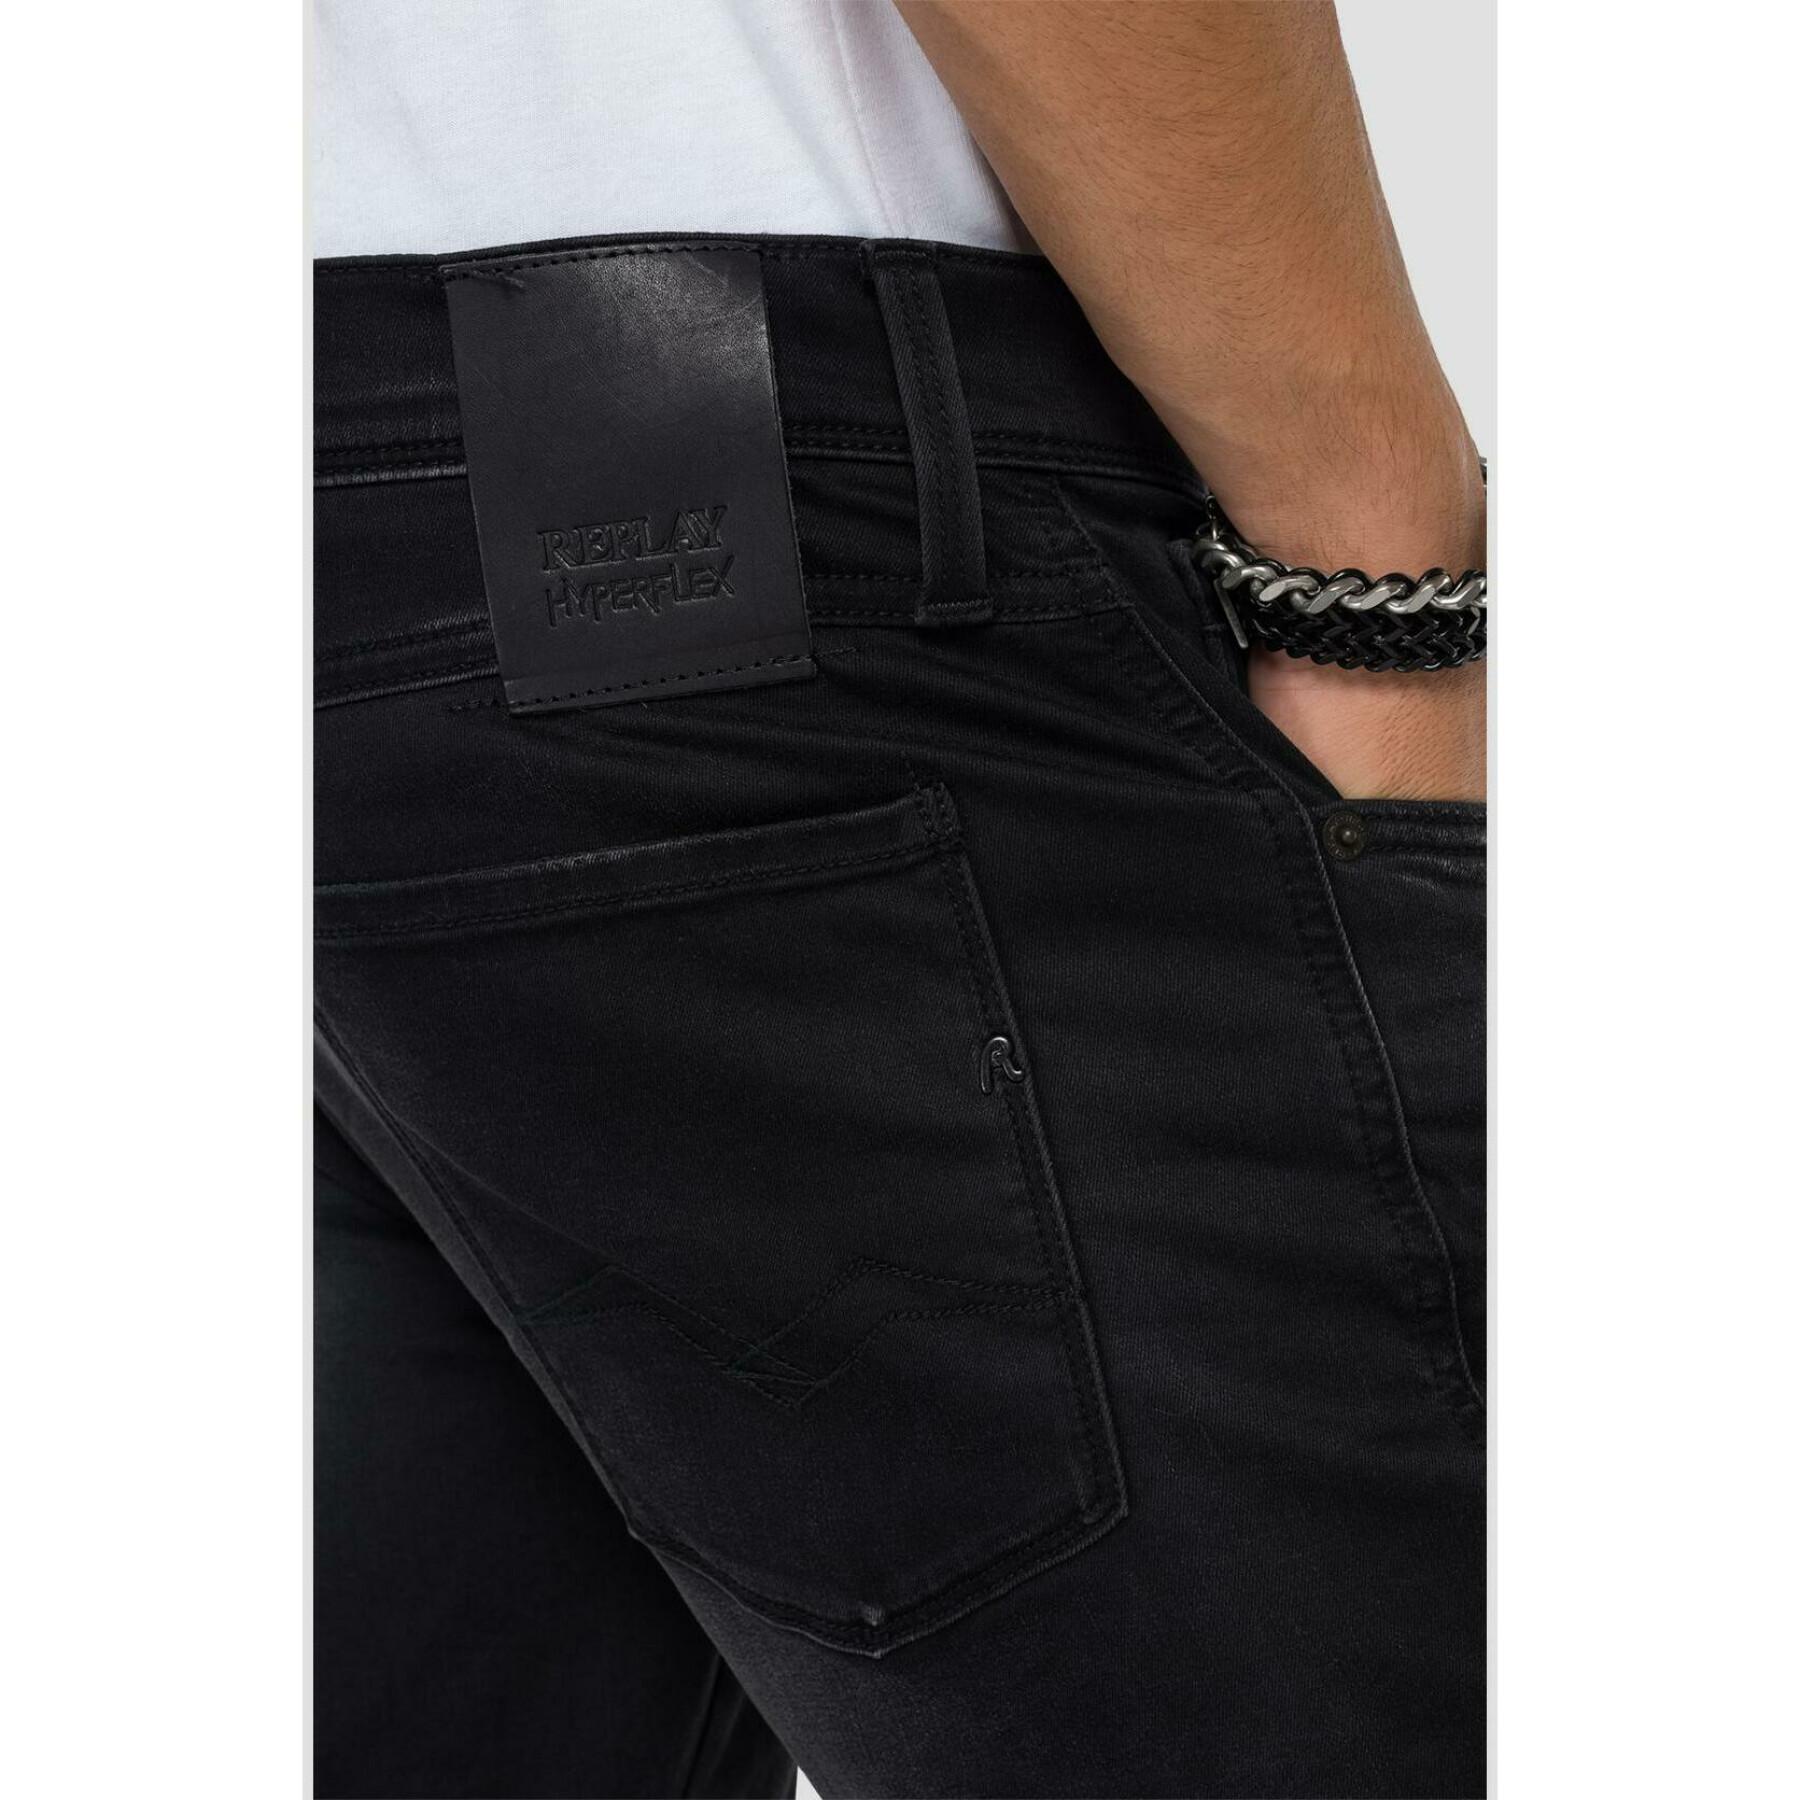 Slim fit jeans Replay anbass hyperflex x.l.i.t.e. re-used